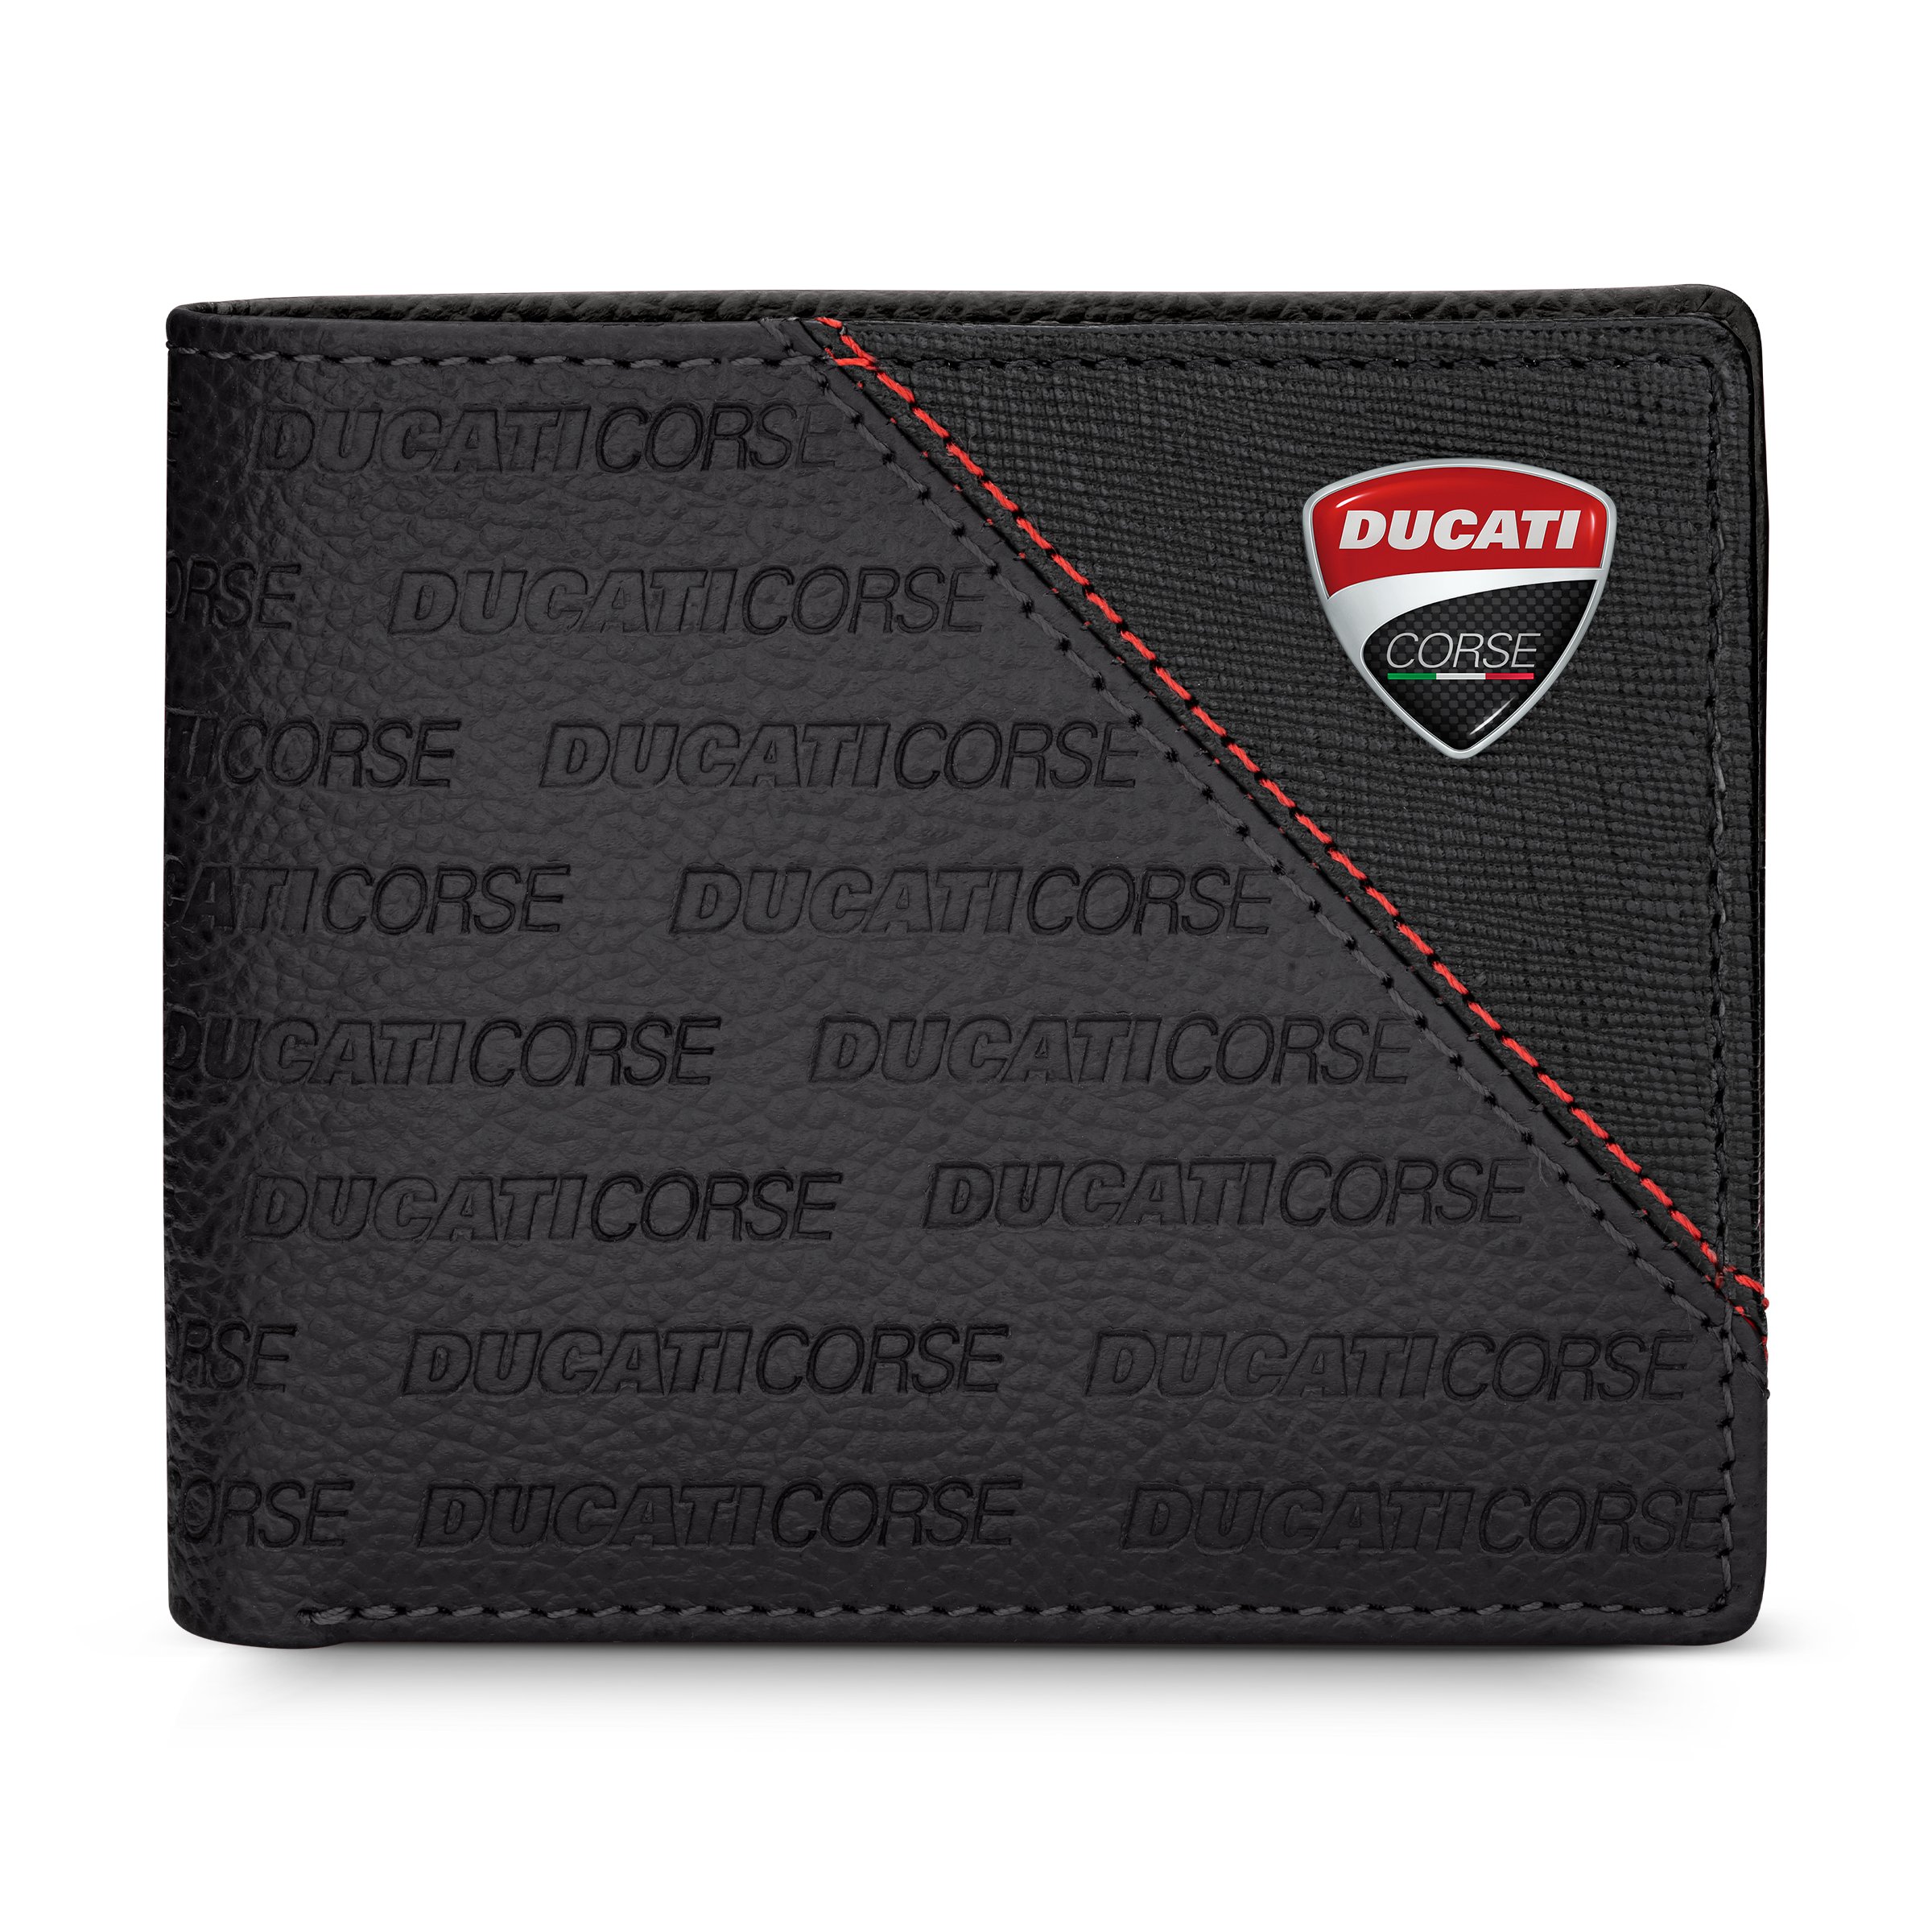 Ducati Corse Black Genuine Leather Wallet For Men Dtlgw2200301